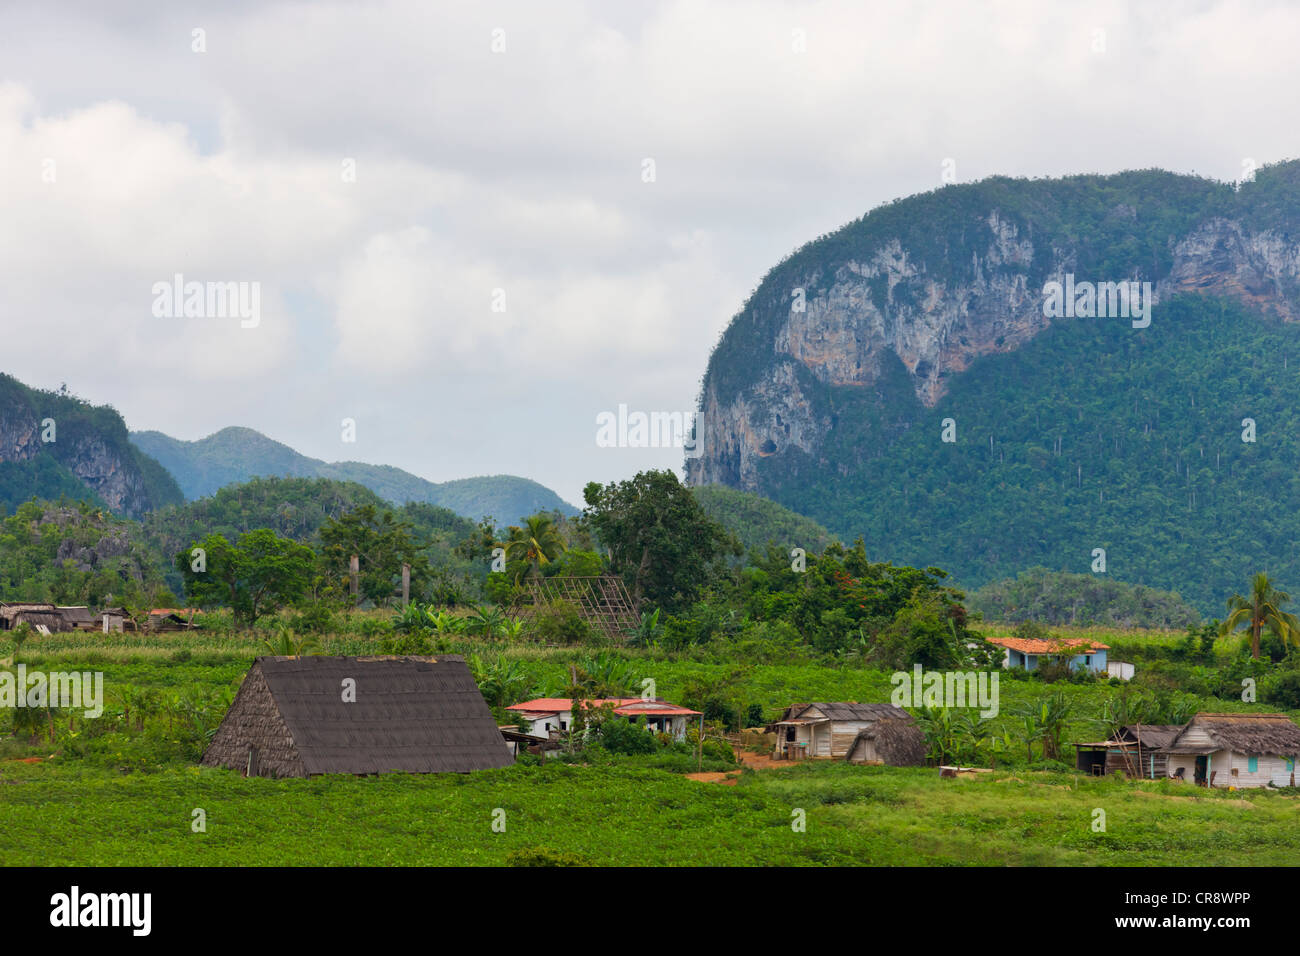 Kalkstein-Hügel, Landwirtschaft, Land und Tabak Trocknung Haus in Vinales Tal, UNESCO-Weltkulturerbe, Kuba Stockfoto